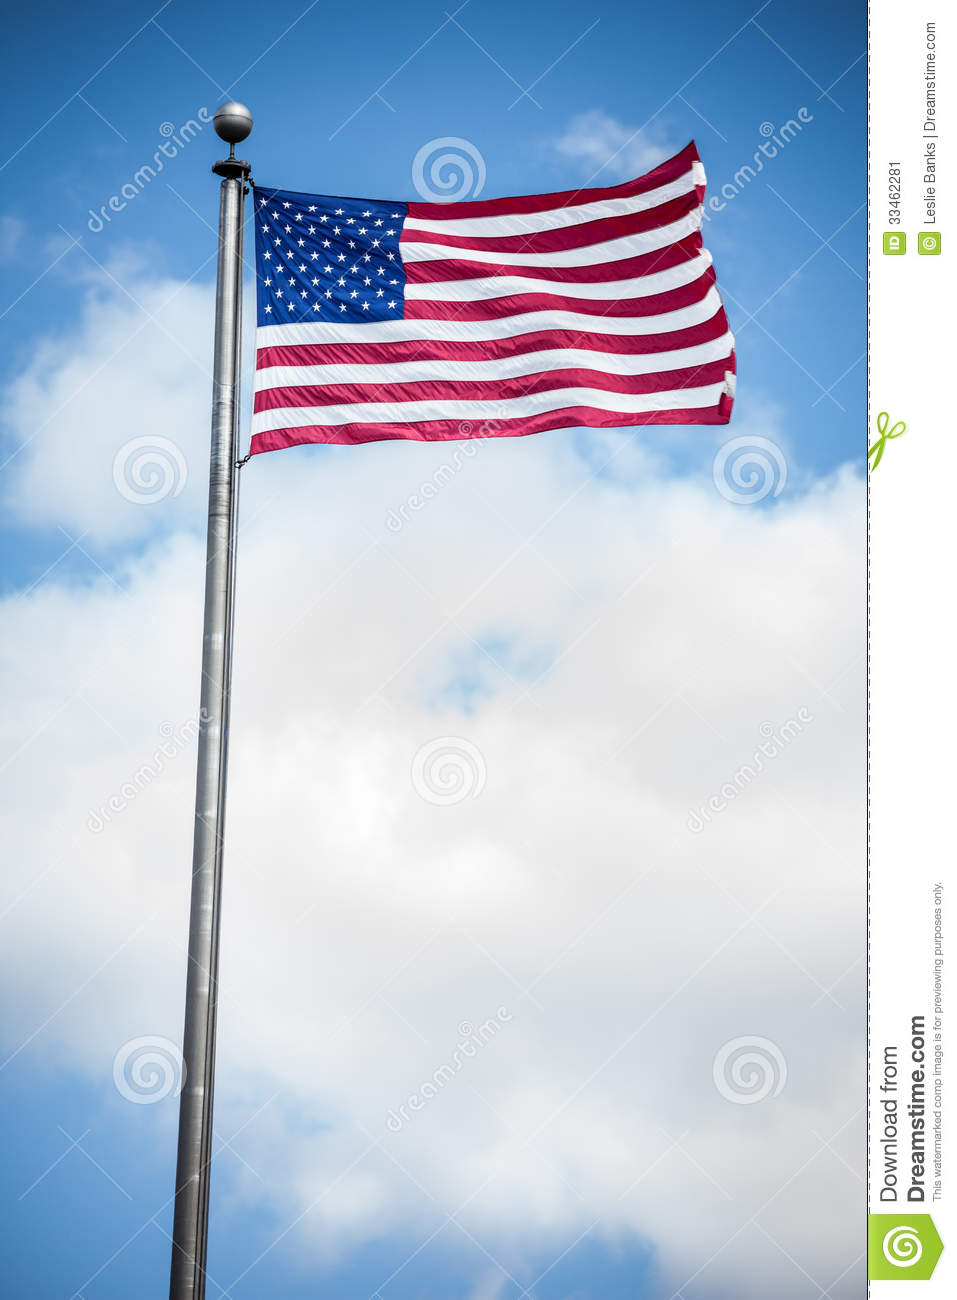 American Flag Stock Image   Image  33462281